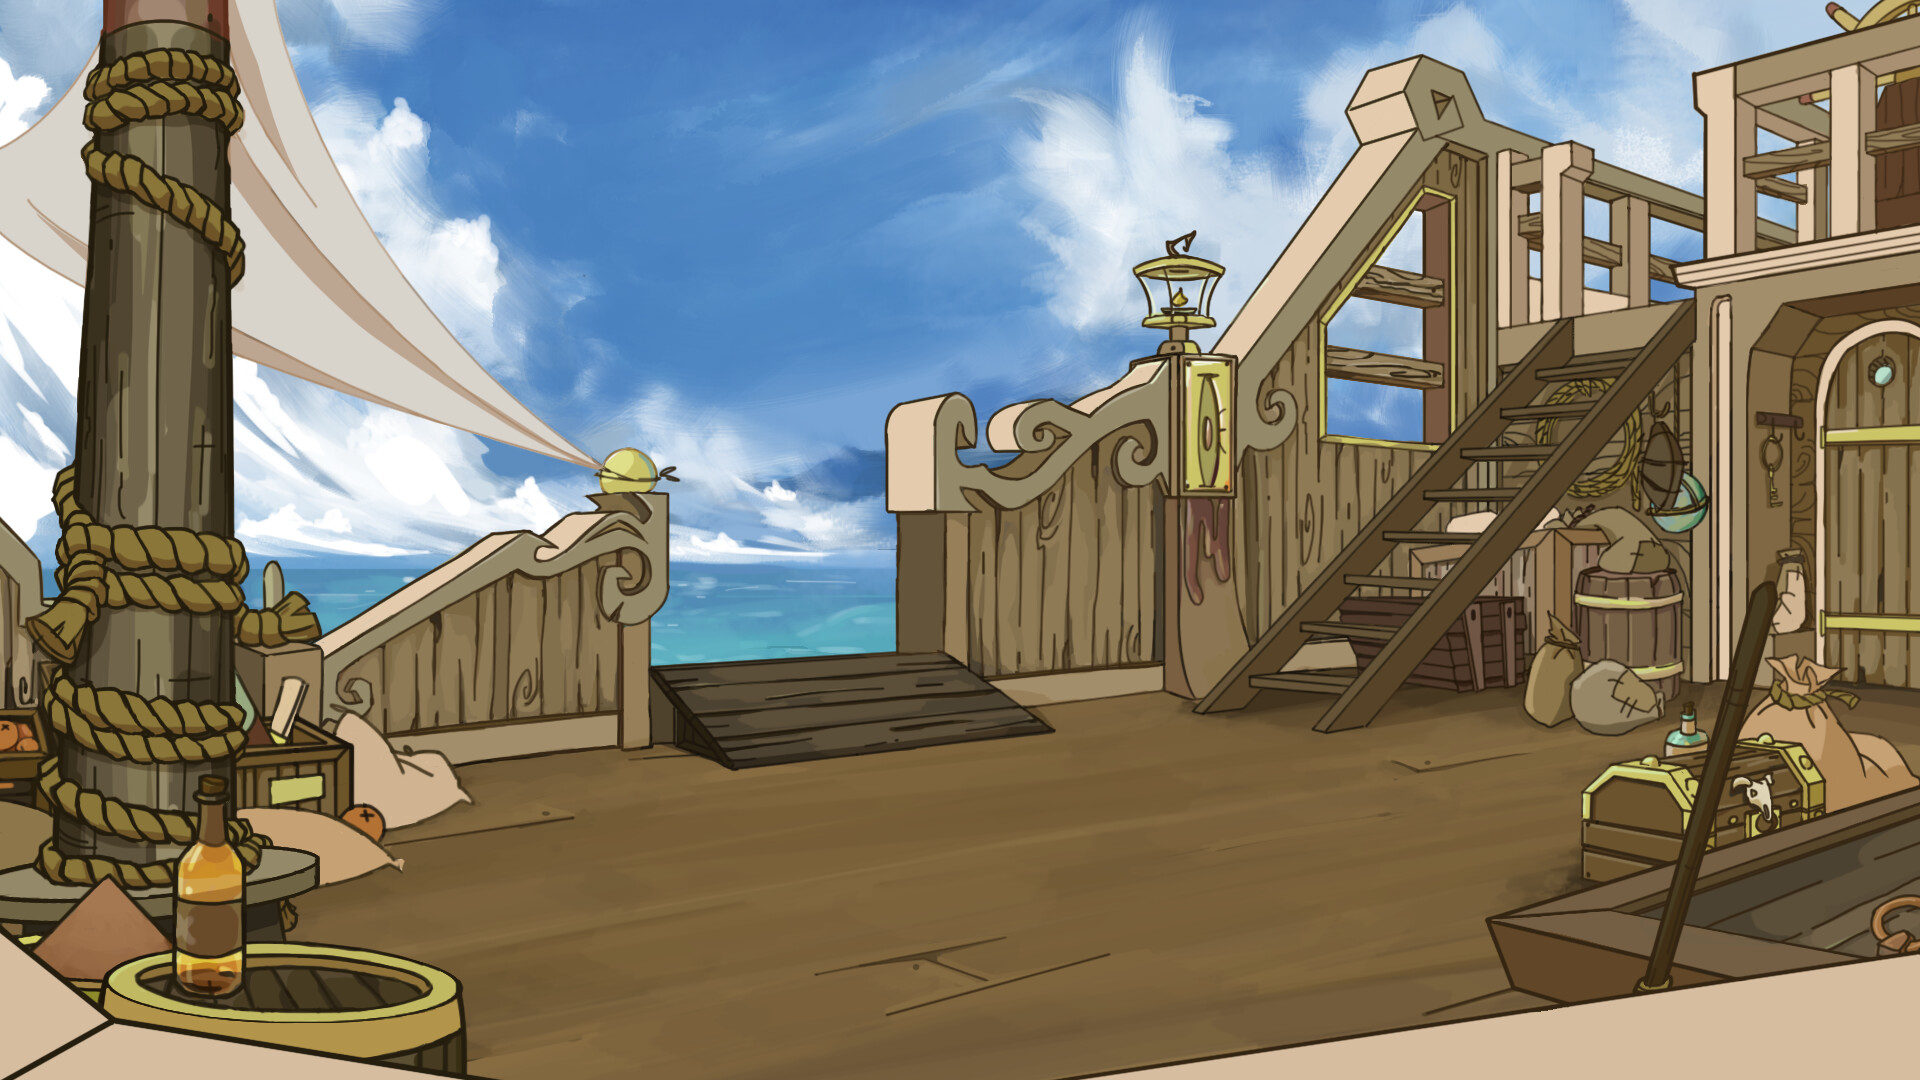 Pirate Ship Cartoon Background